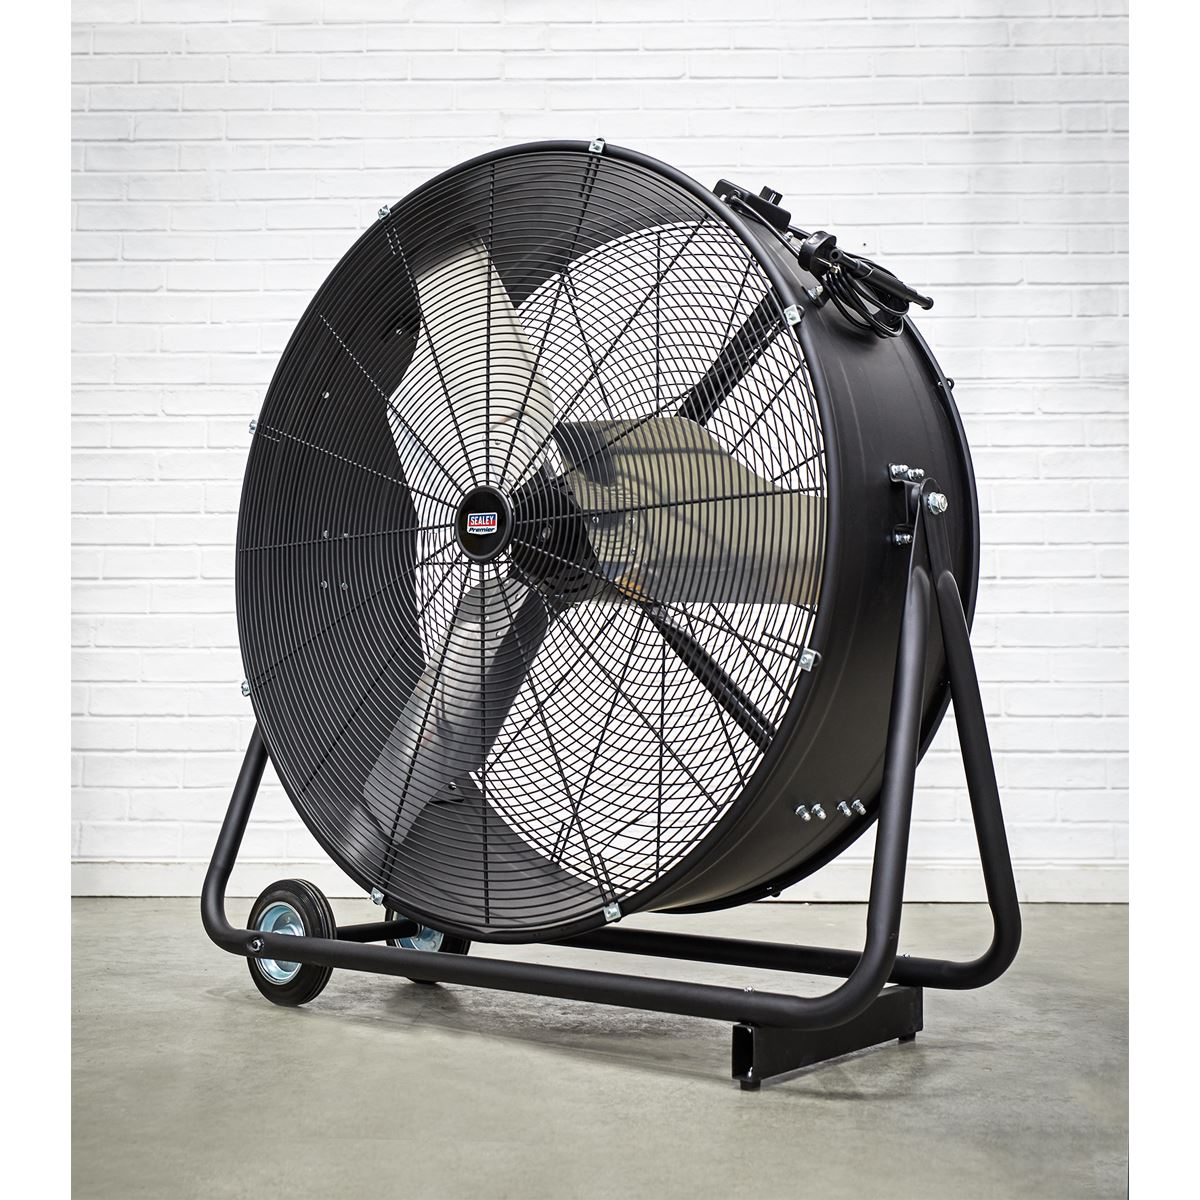 Sealey Premier Industrial High Velocity Drum Fan 36" 230V - Premier